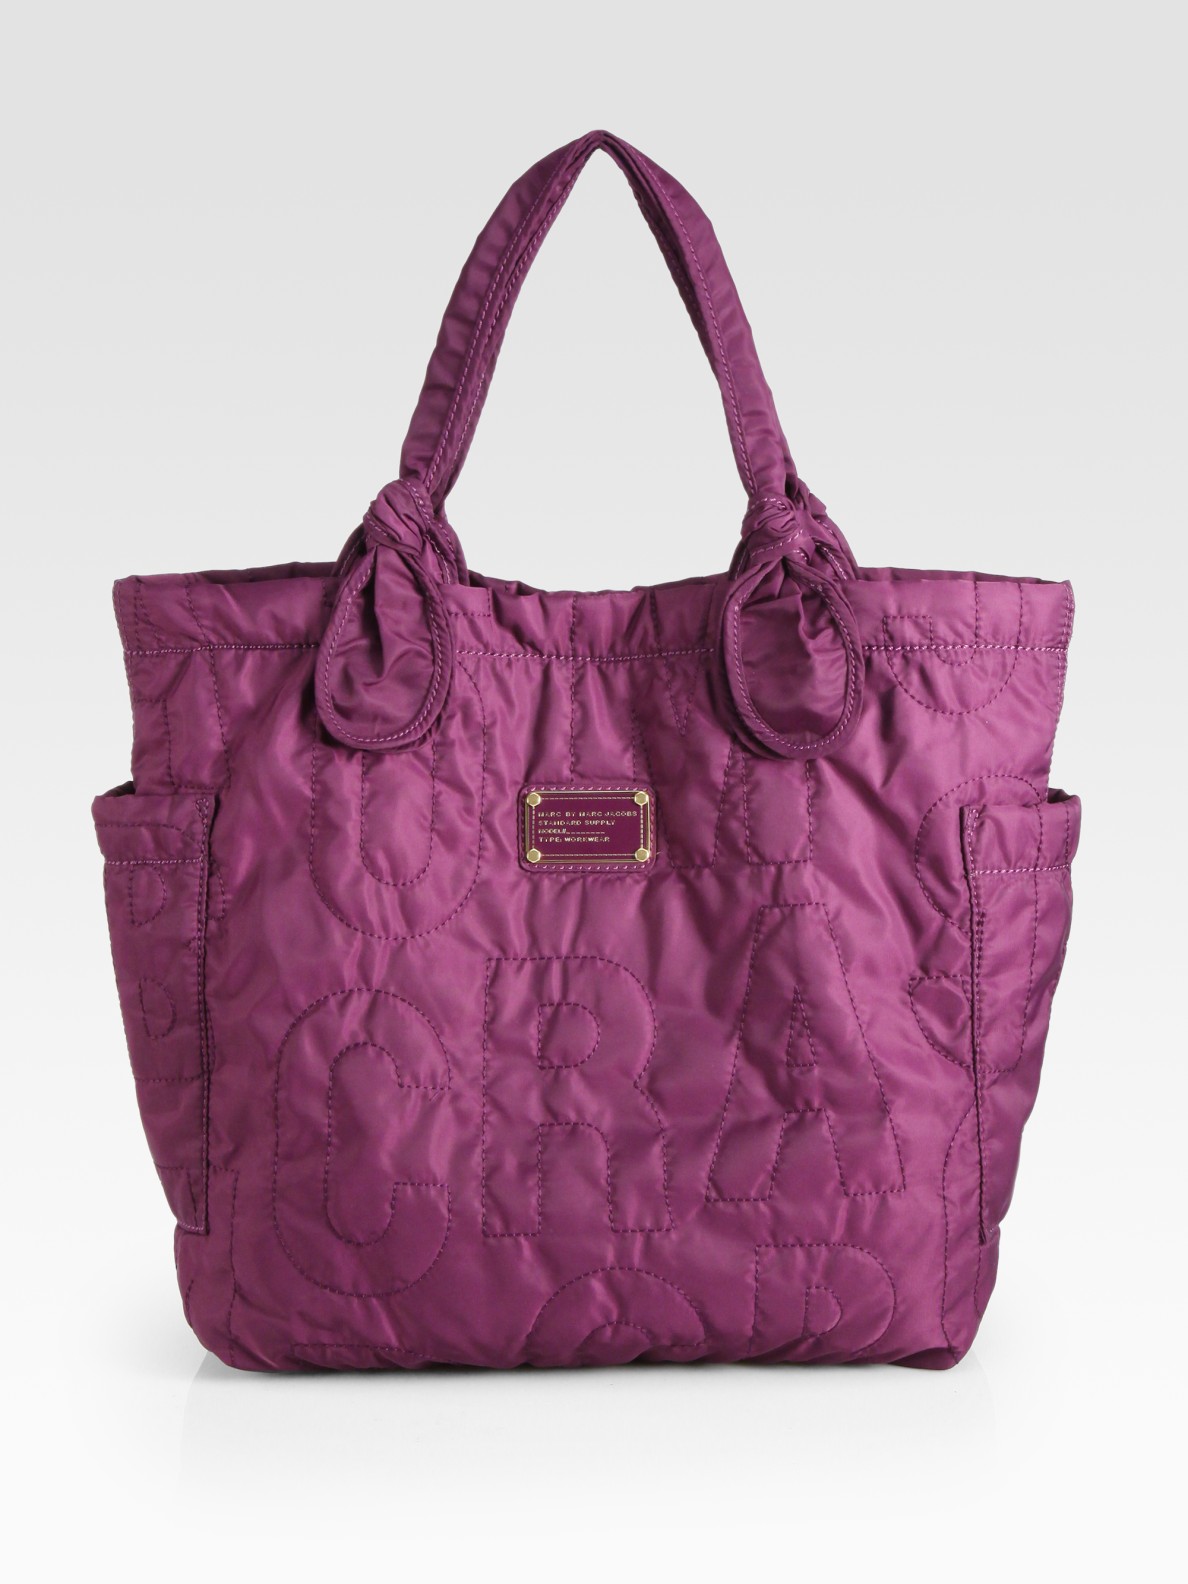 Lyst - Marc By Marc Jacobs Pretty Nylon Medium Tate Tote Bag in Purple